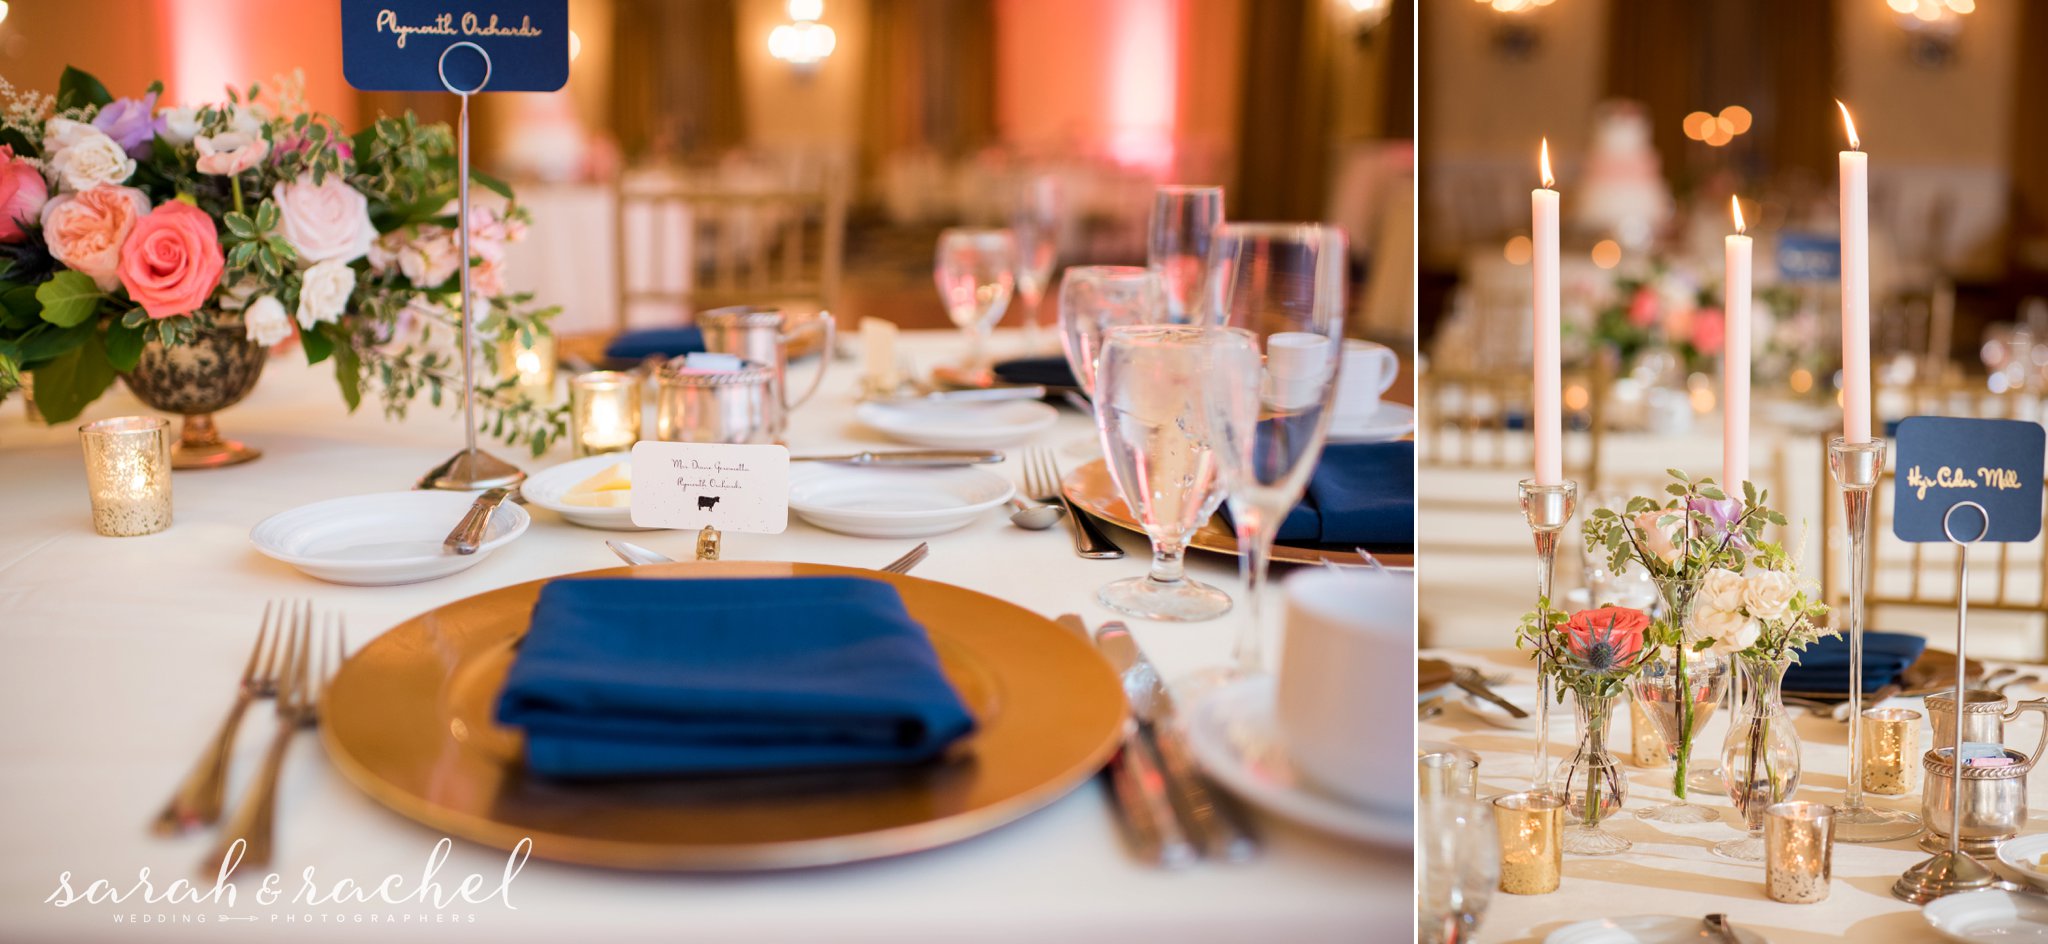 Gold and Navy wedding reception | Gold Chivari Chairs | Blush and navy wedding decor | Dearborn Inn Wedding | Detroit Michigan | Sarah and Rachel Wedding Photographers